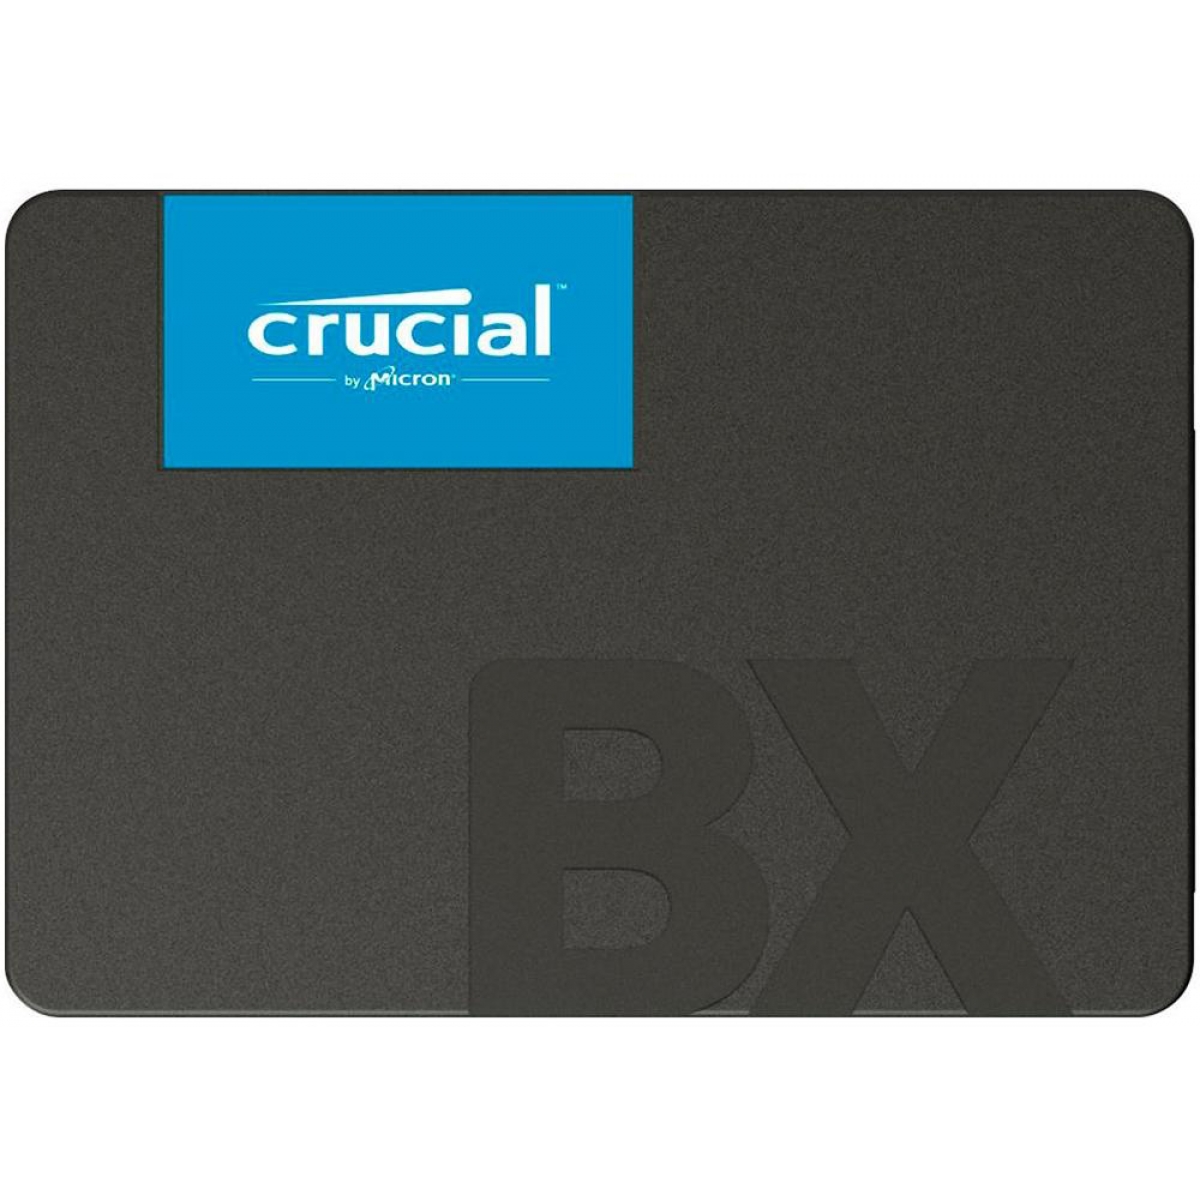 SSD Crucial BX500, 120GB, Sata III, Leitura 540MBs Gravação 500MBs, CT120BX500SSD1 